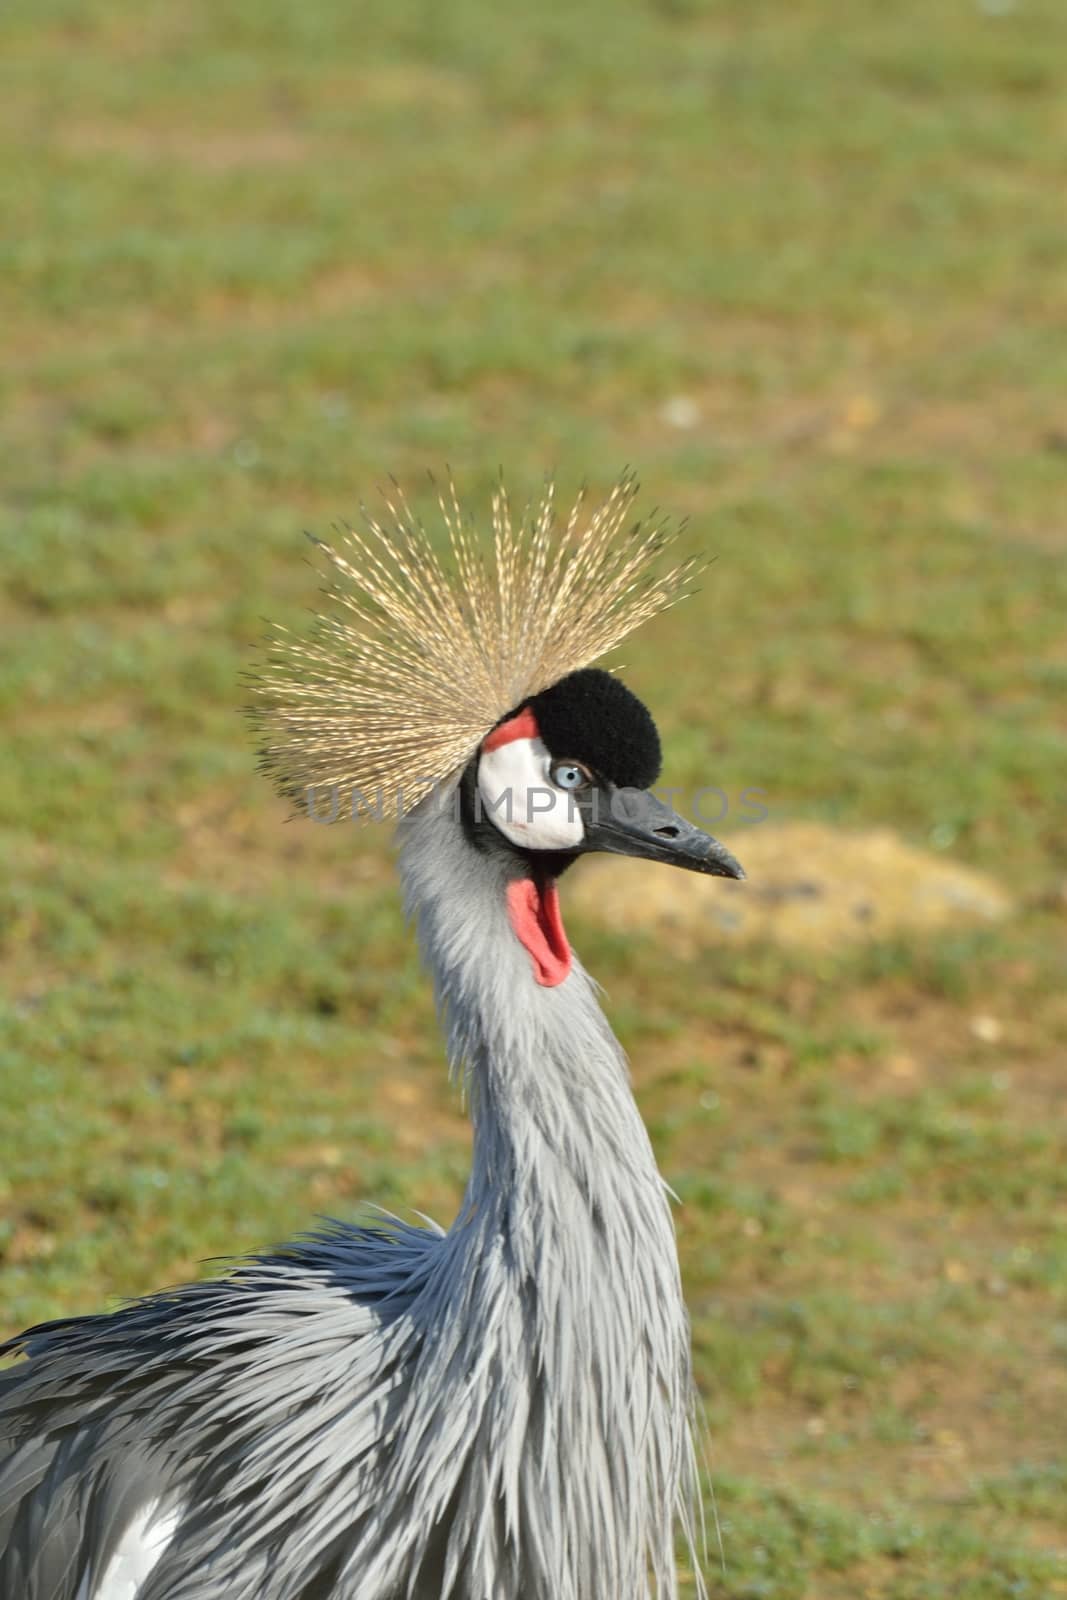 Head of grey crane by pauws99